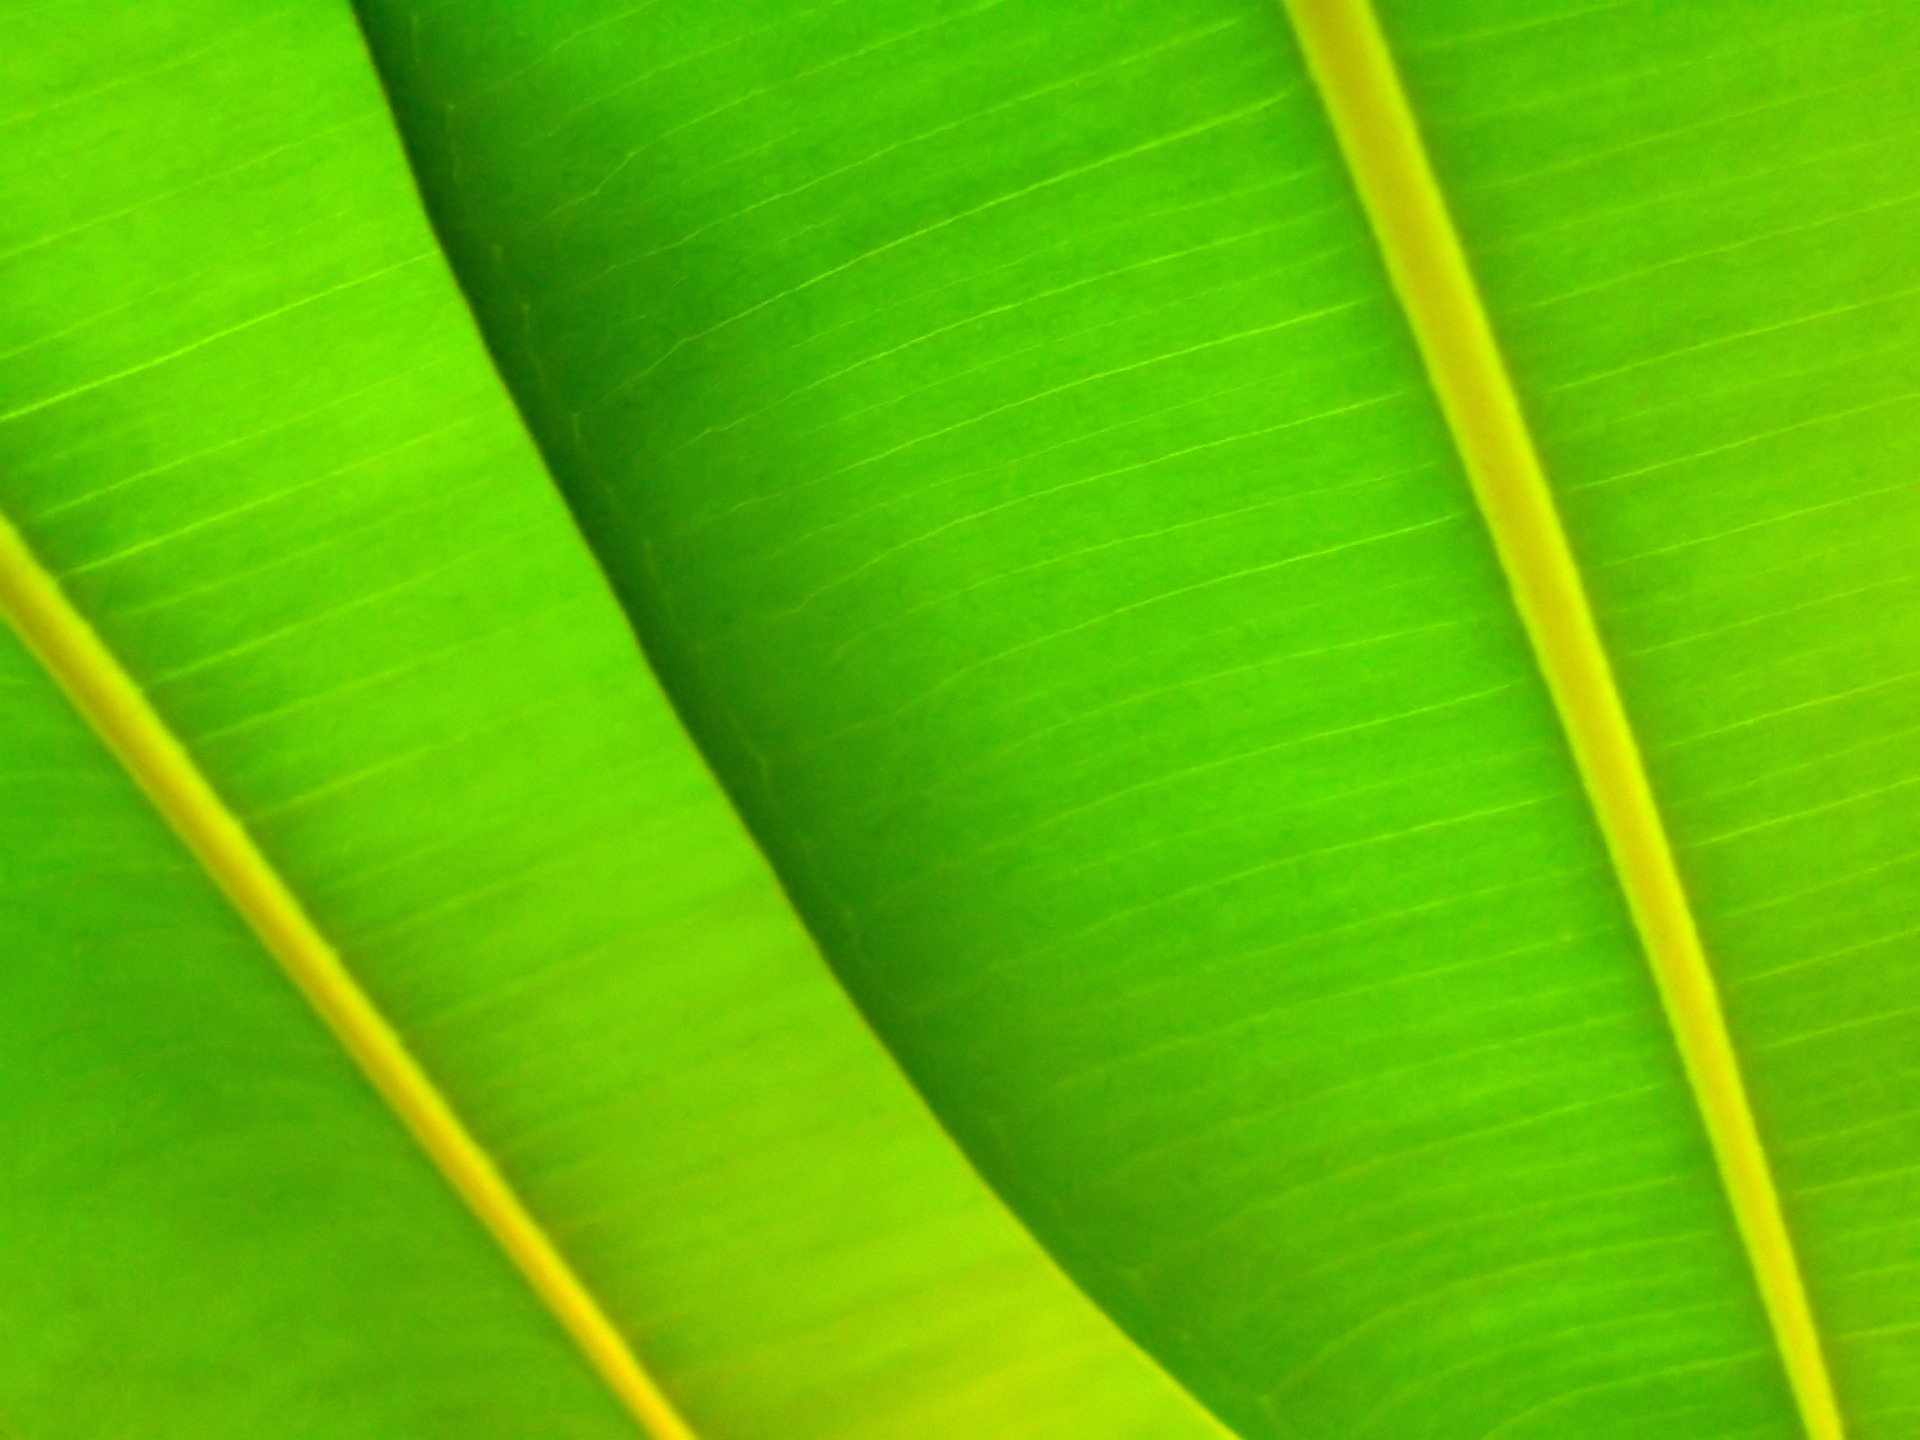 Green leafs photo